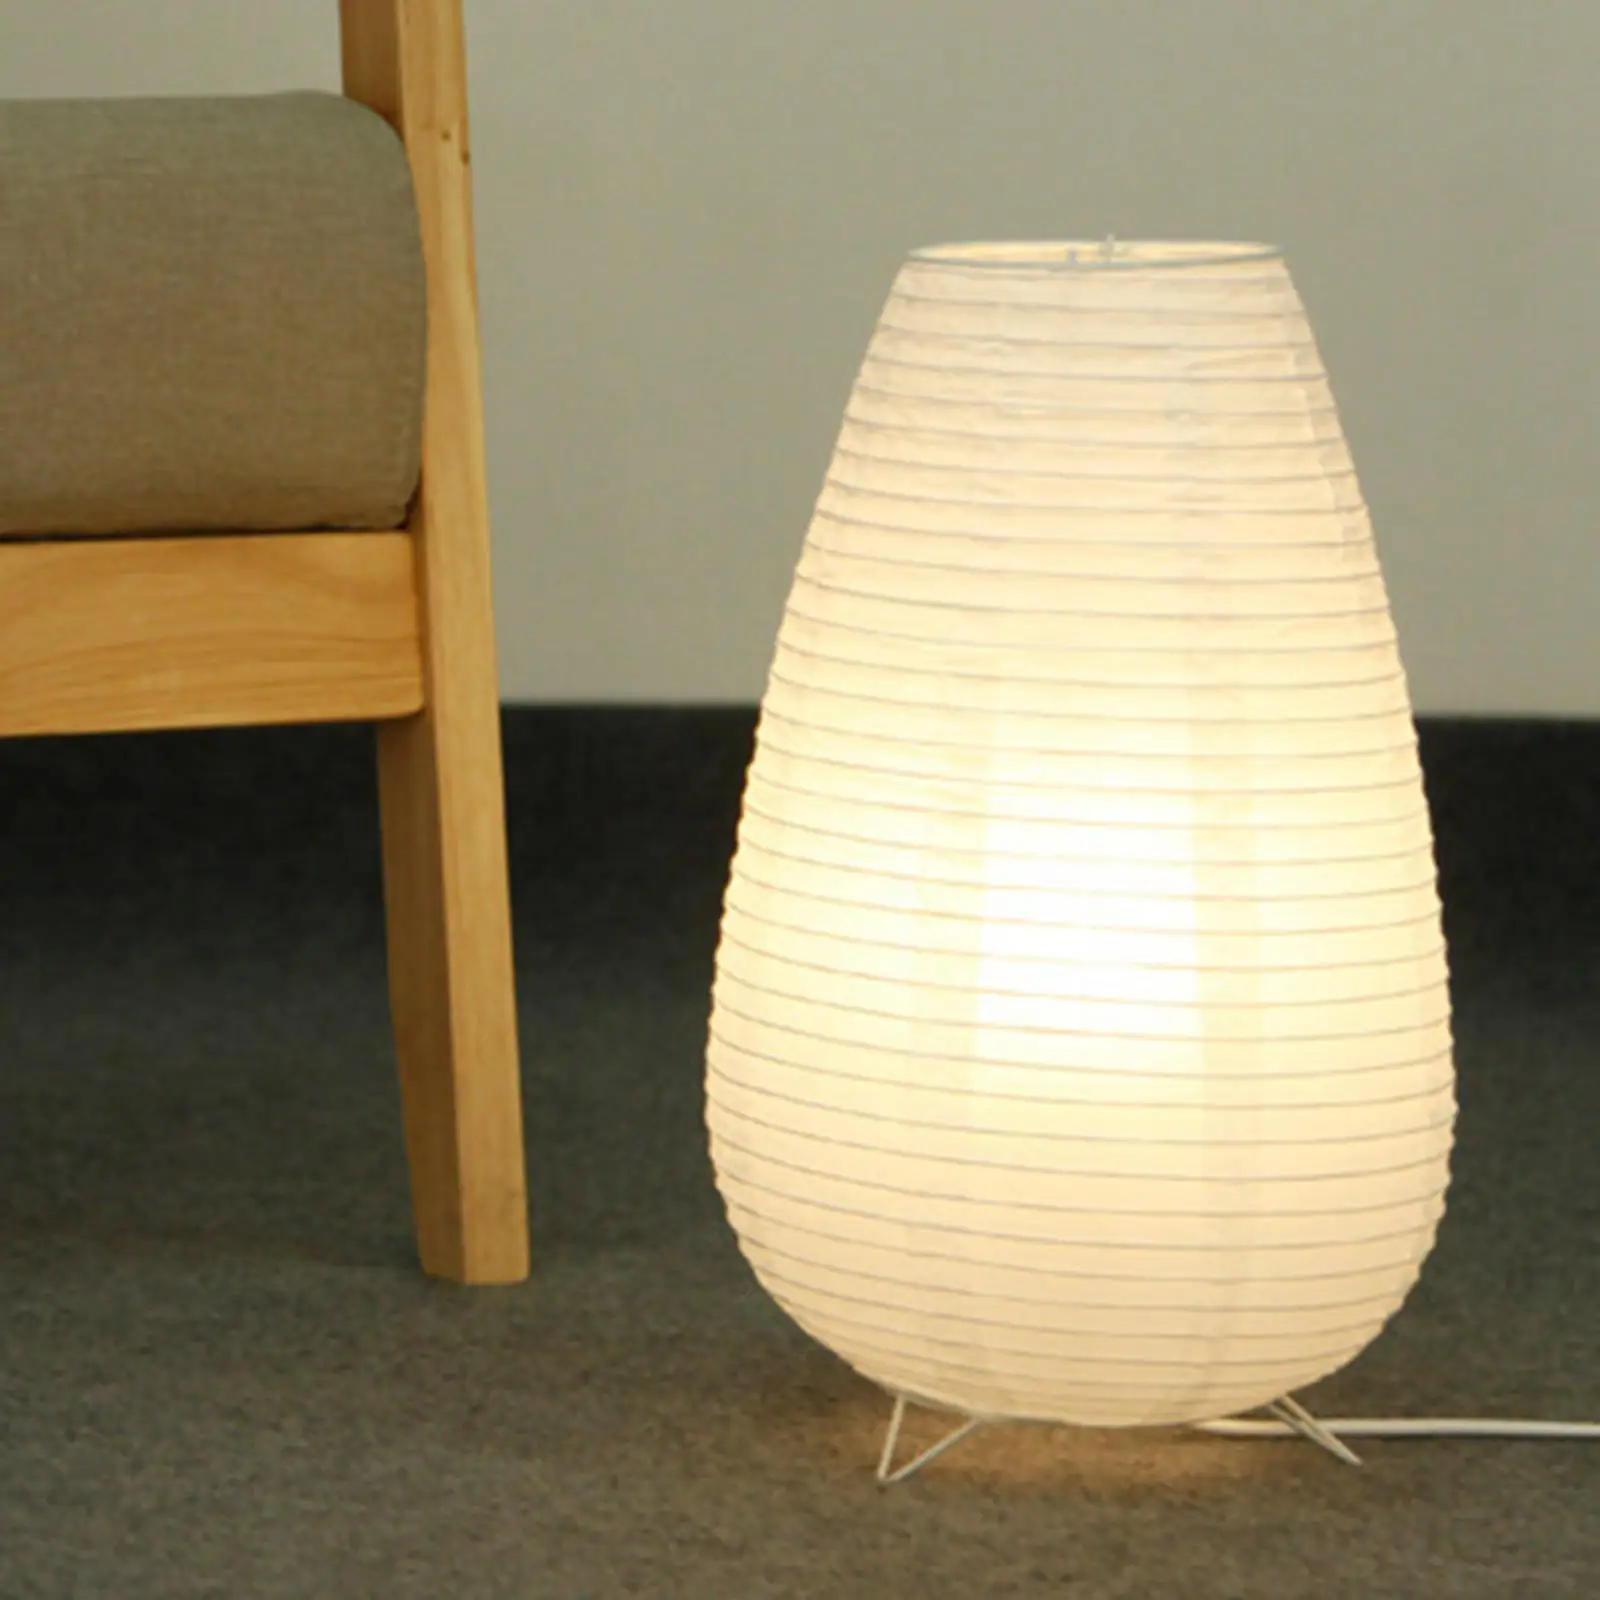 Paper Lantern Table Lamp Simple Lantern Lamp Desk Light for Bedside, Office, Home Decor